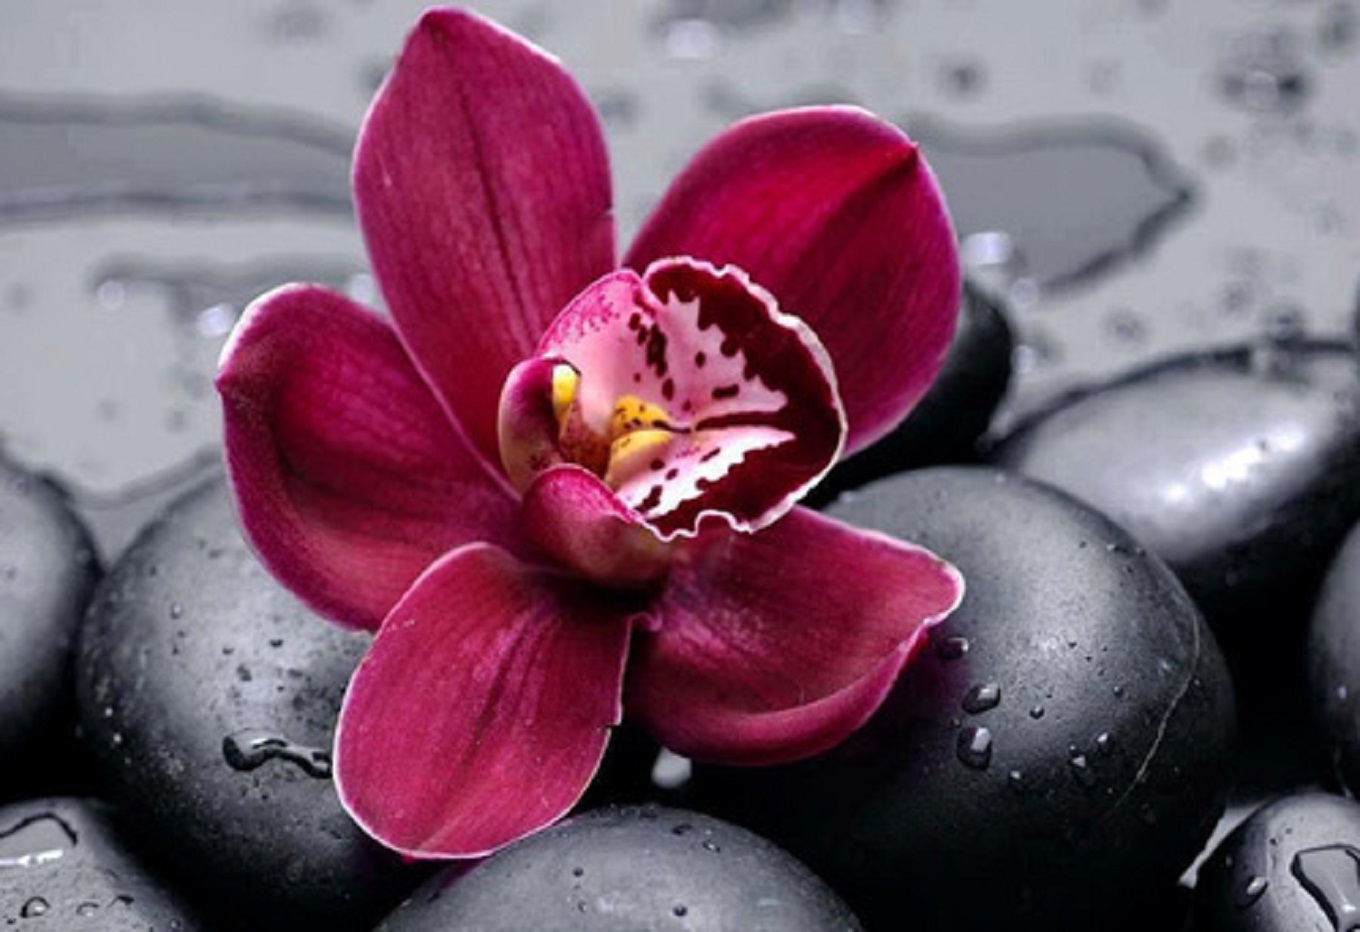 Black Orchid Flower